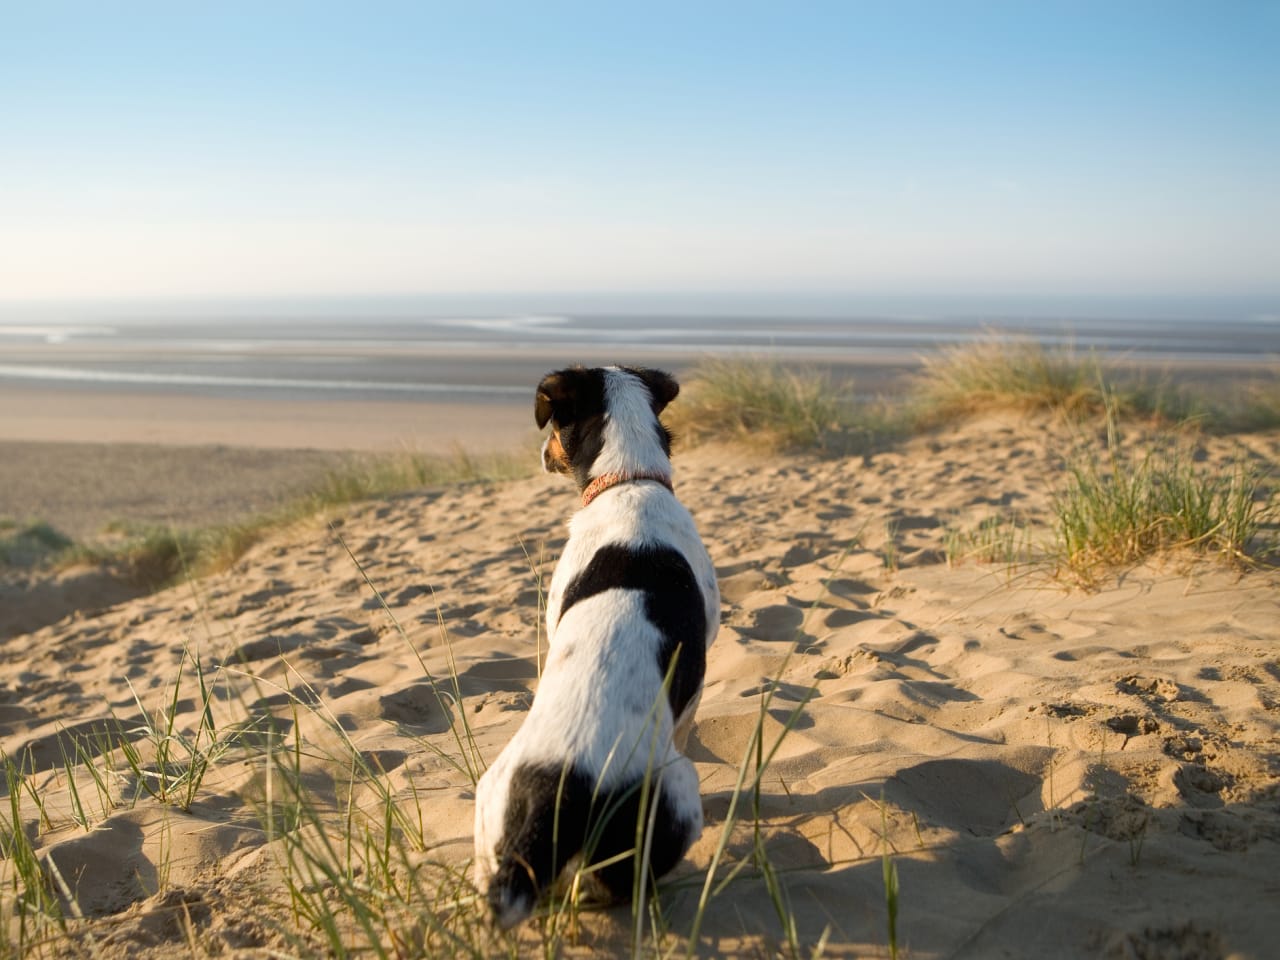 Jack Russell Terrier am Strand ©Tim Platt/DigitalVision via Getty Images